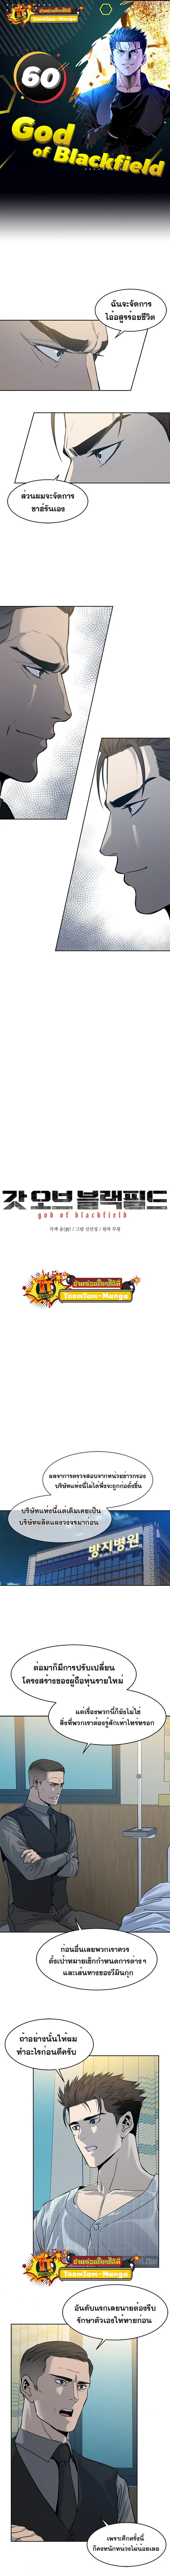 God of Blackfield02